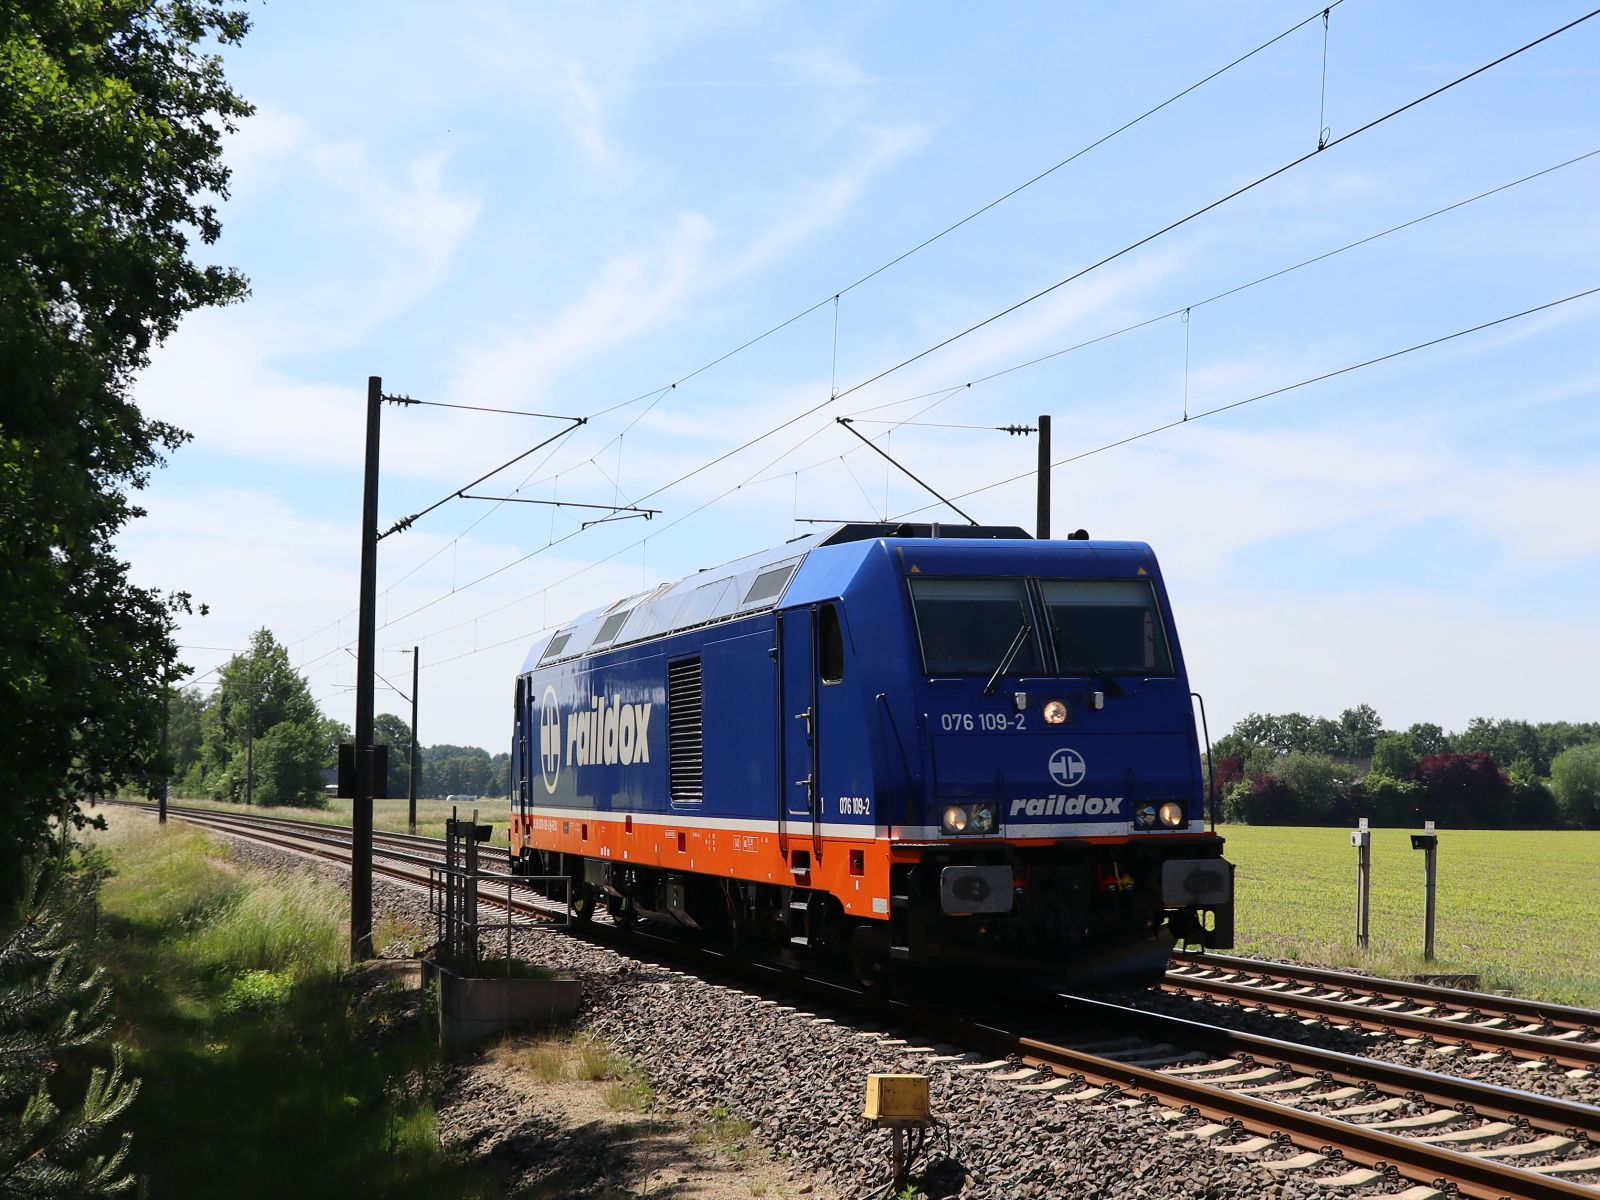 Raildox Diesellokomotive 076 109-2 (92 88 0076 109-2 B-RDX) Bernte, Emsbüren 03-06-2022.

Raildox diesellocomotief 076 109-2 (92 88 0076 109-2 B-RDX) Bernte, Emsbüren 03-06-2022.